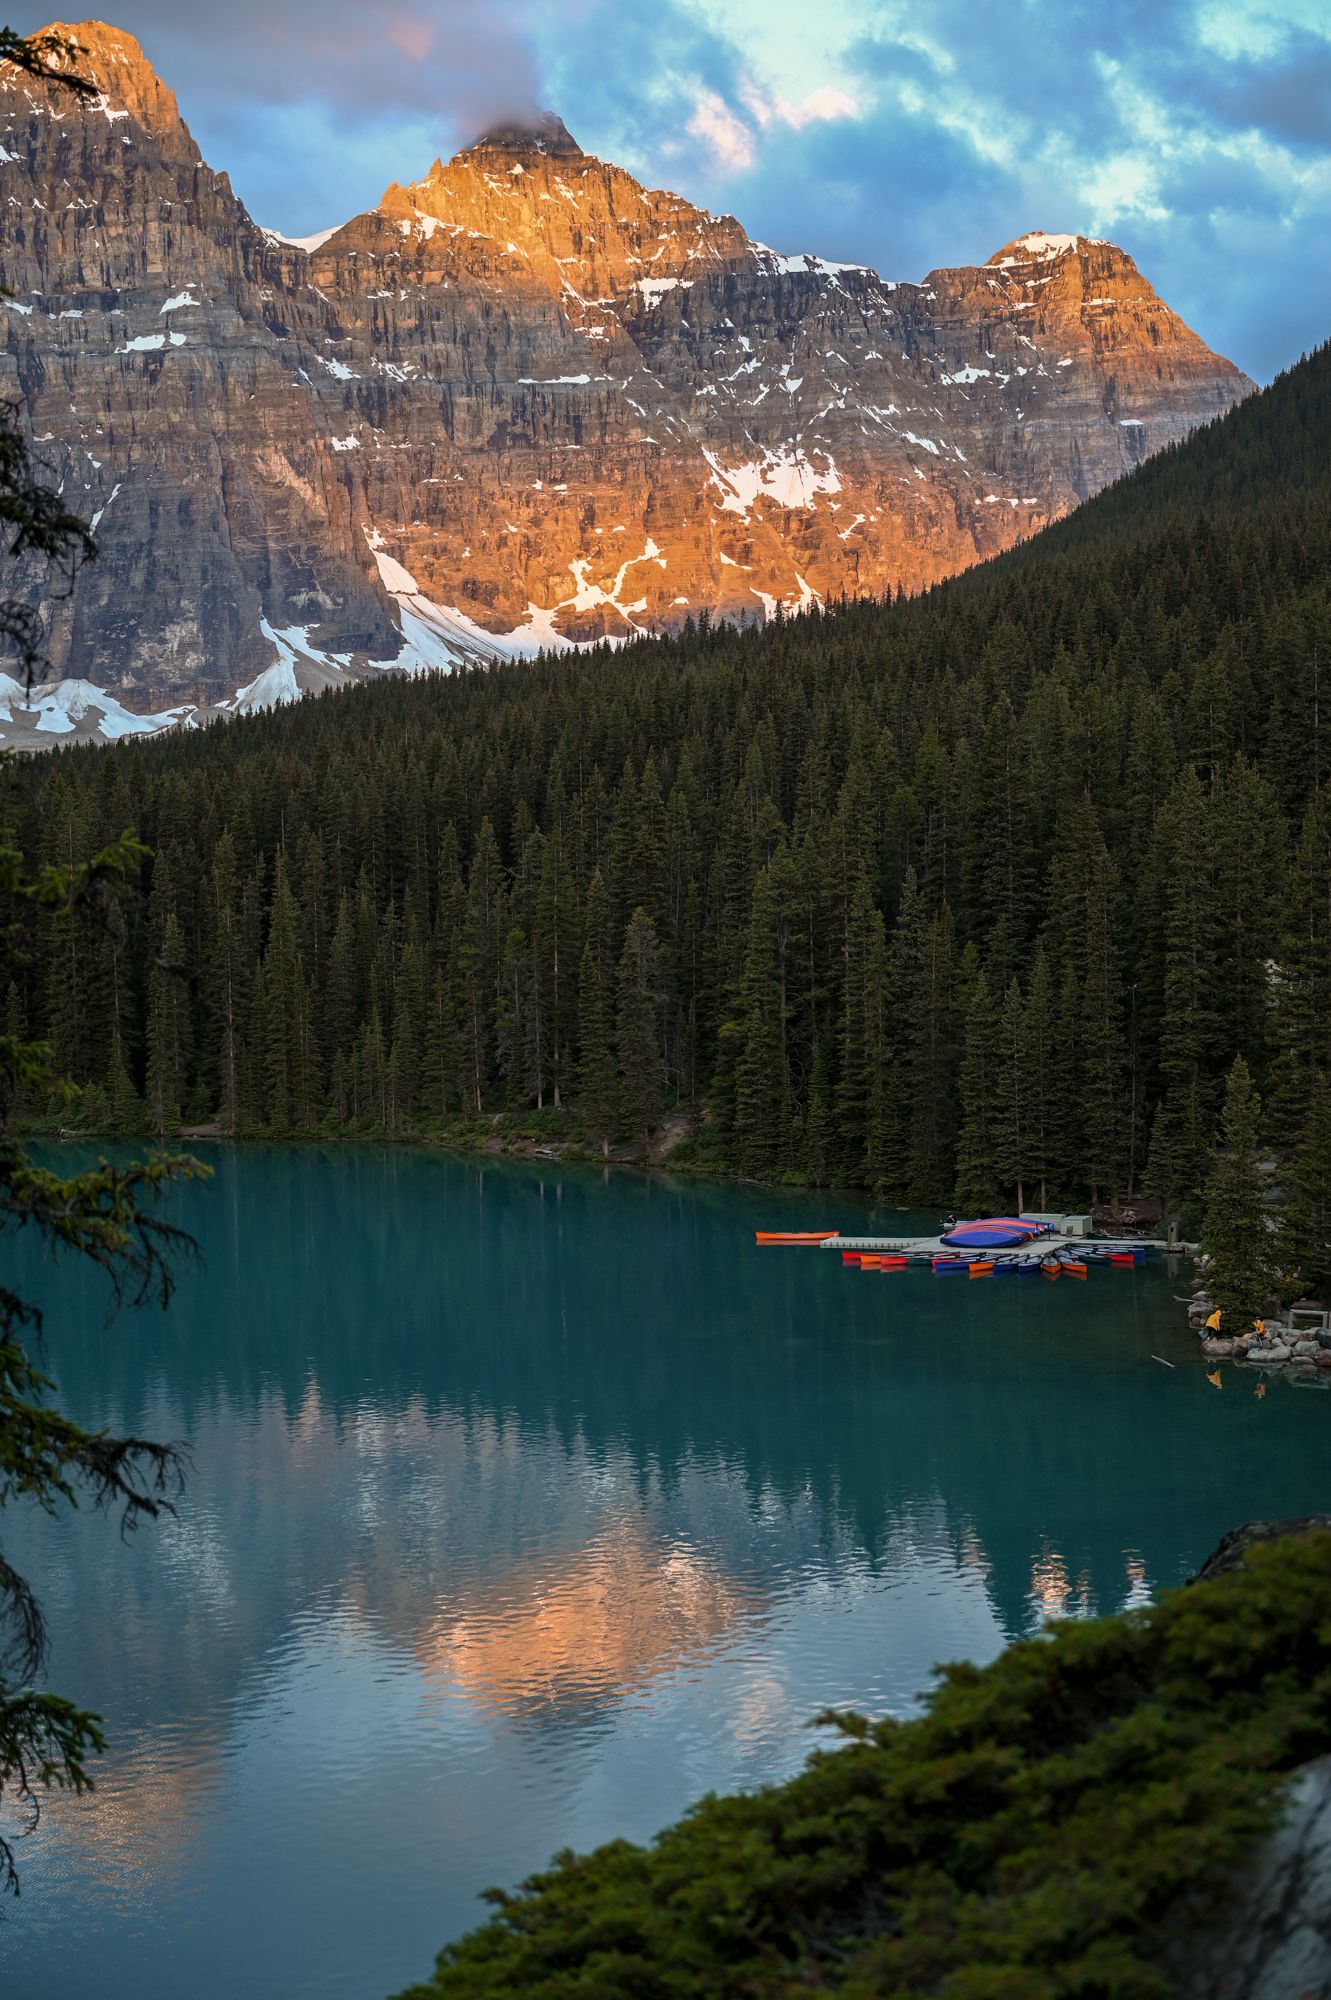 Sunrise at Moraine Lake in Banff National Park